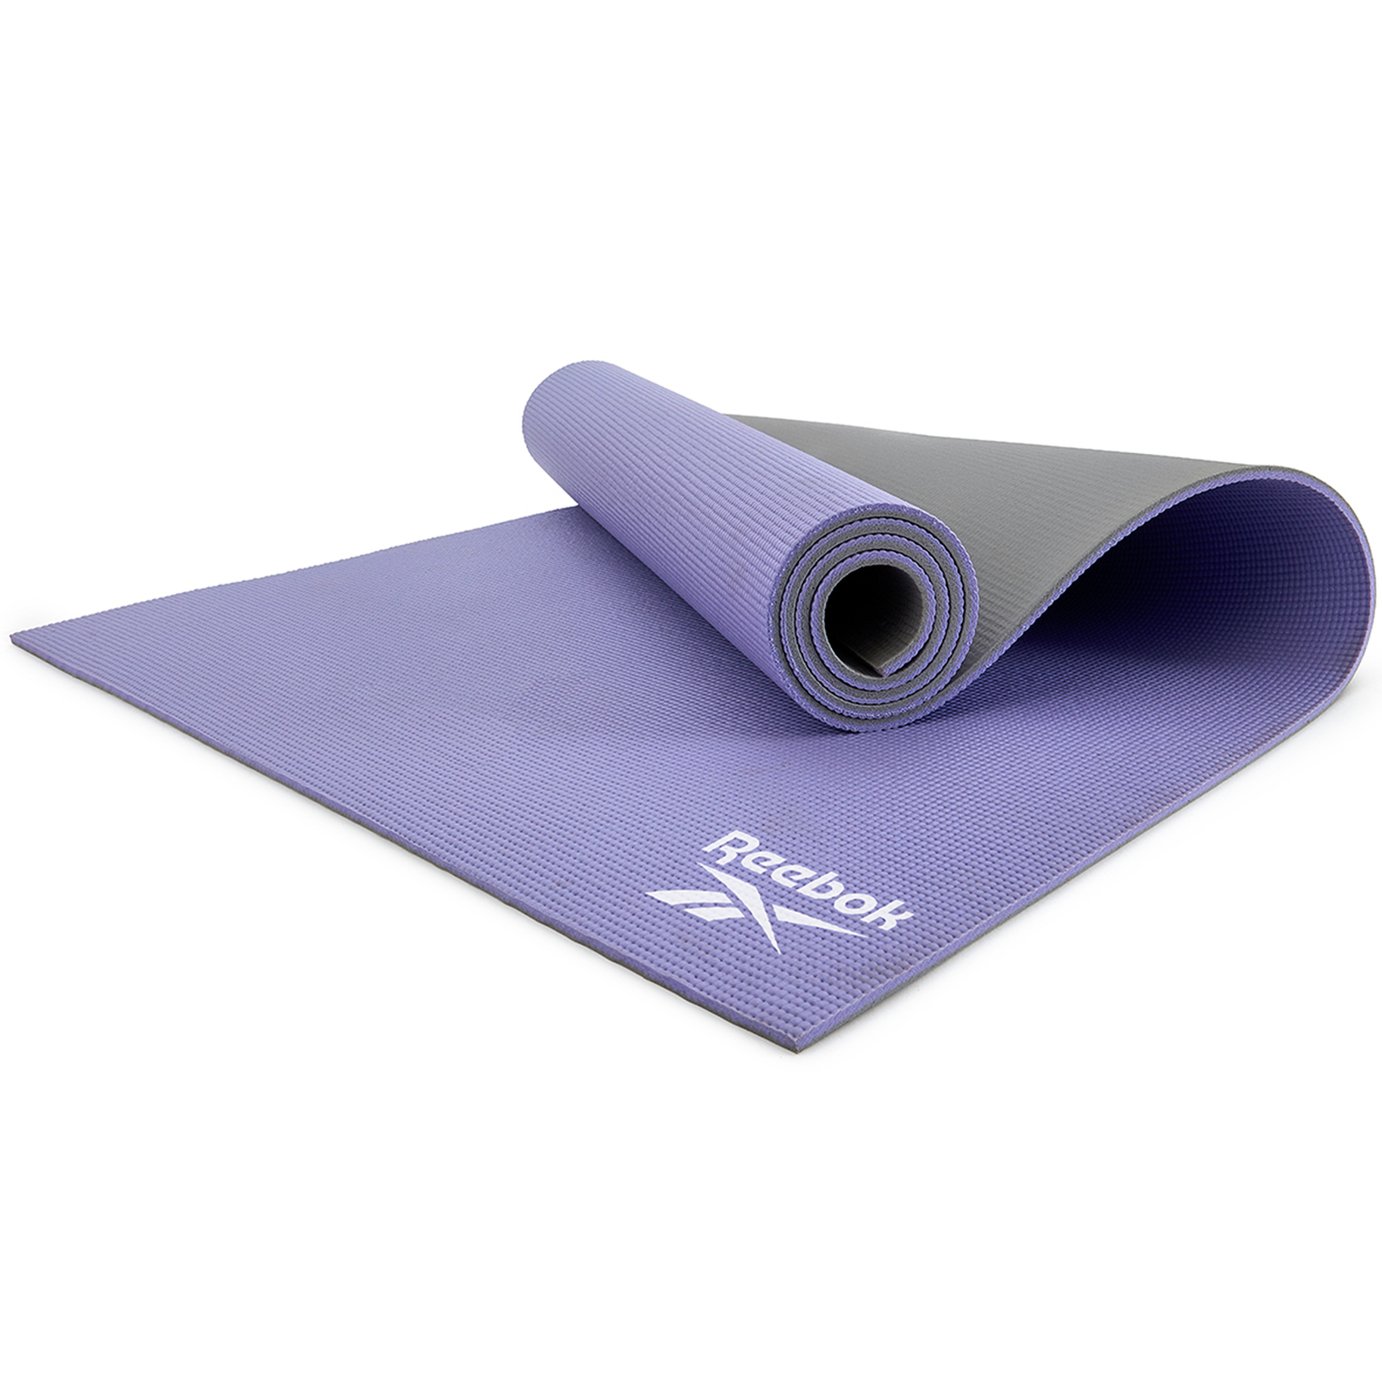 Reebok 6mm PVC Yoga Exercise Mat - Purple and Grey